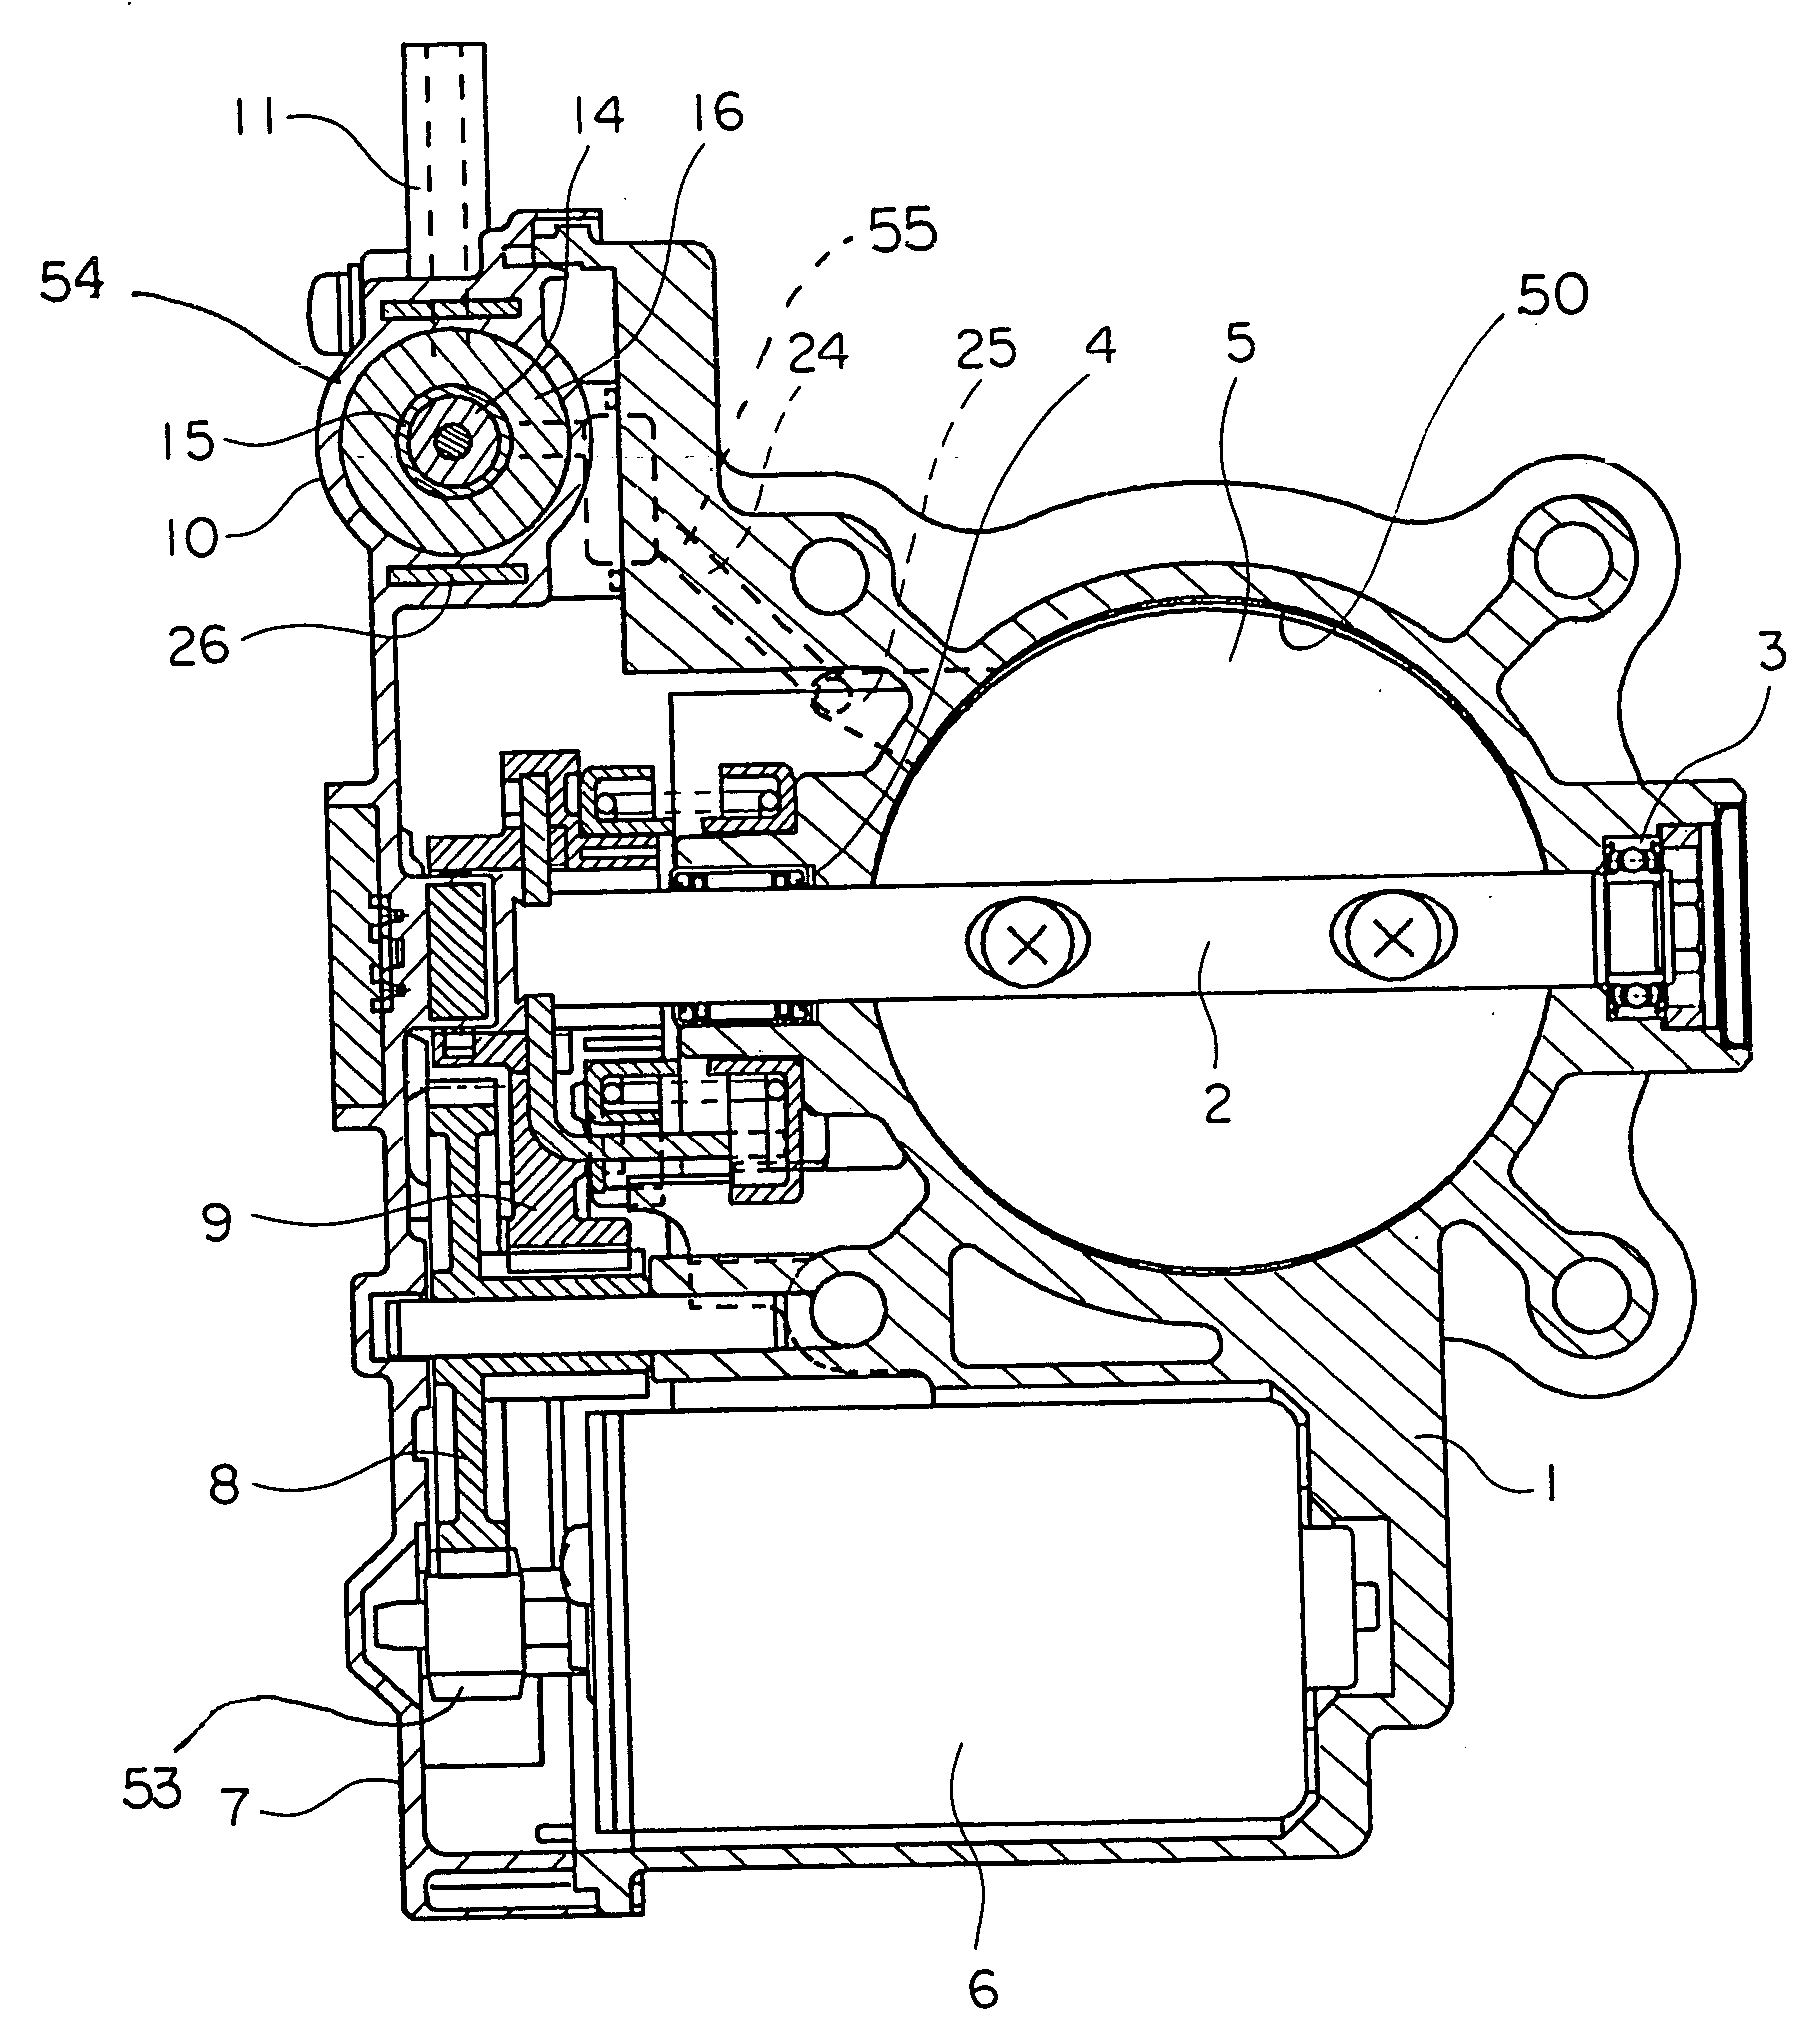 Engine intake control device